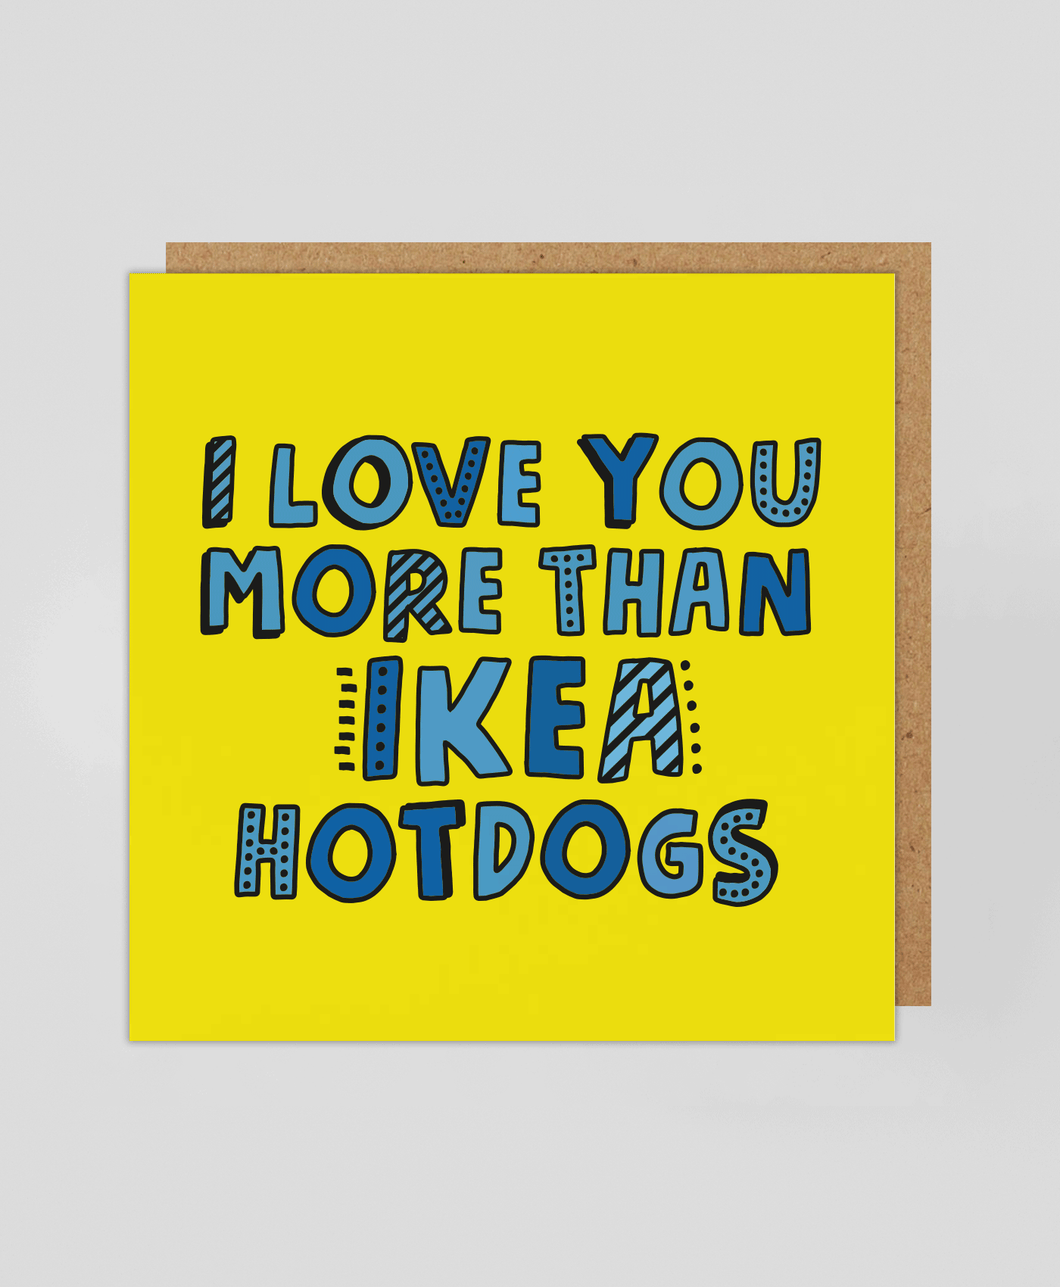 IKEA Hotdogs - Greetings Card